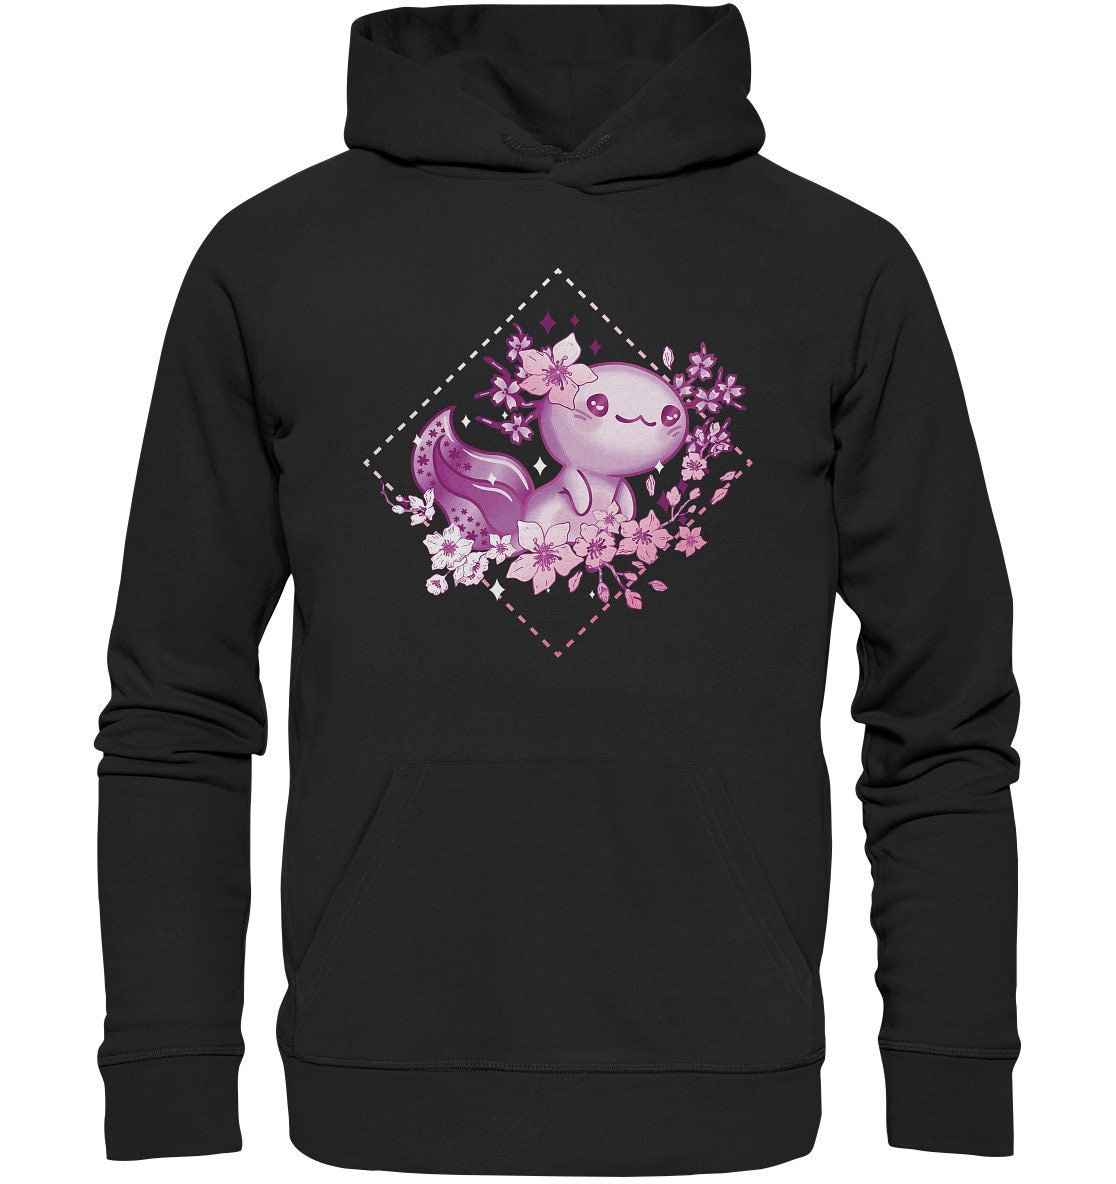 Cherry blossom hoodie